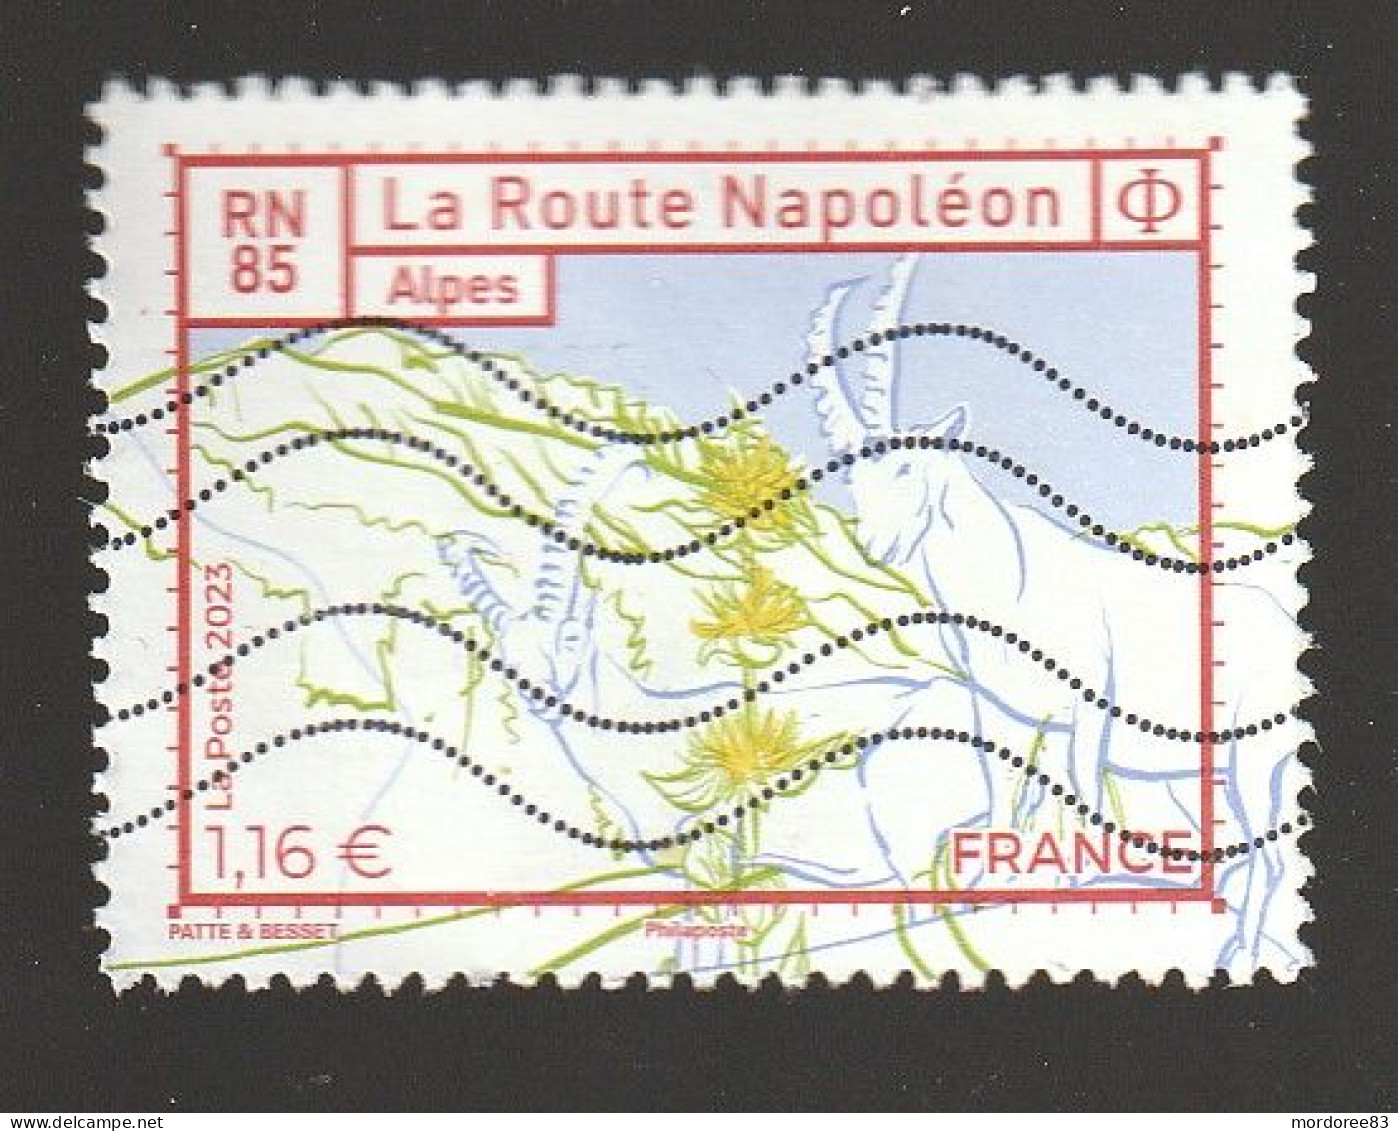 FRANCE 2023 LA ROUTE NAPOLEON ALPES OBLITERE - Used Stamps